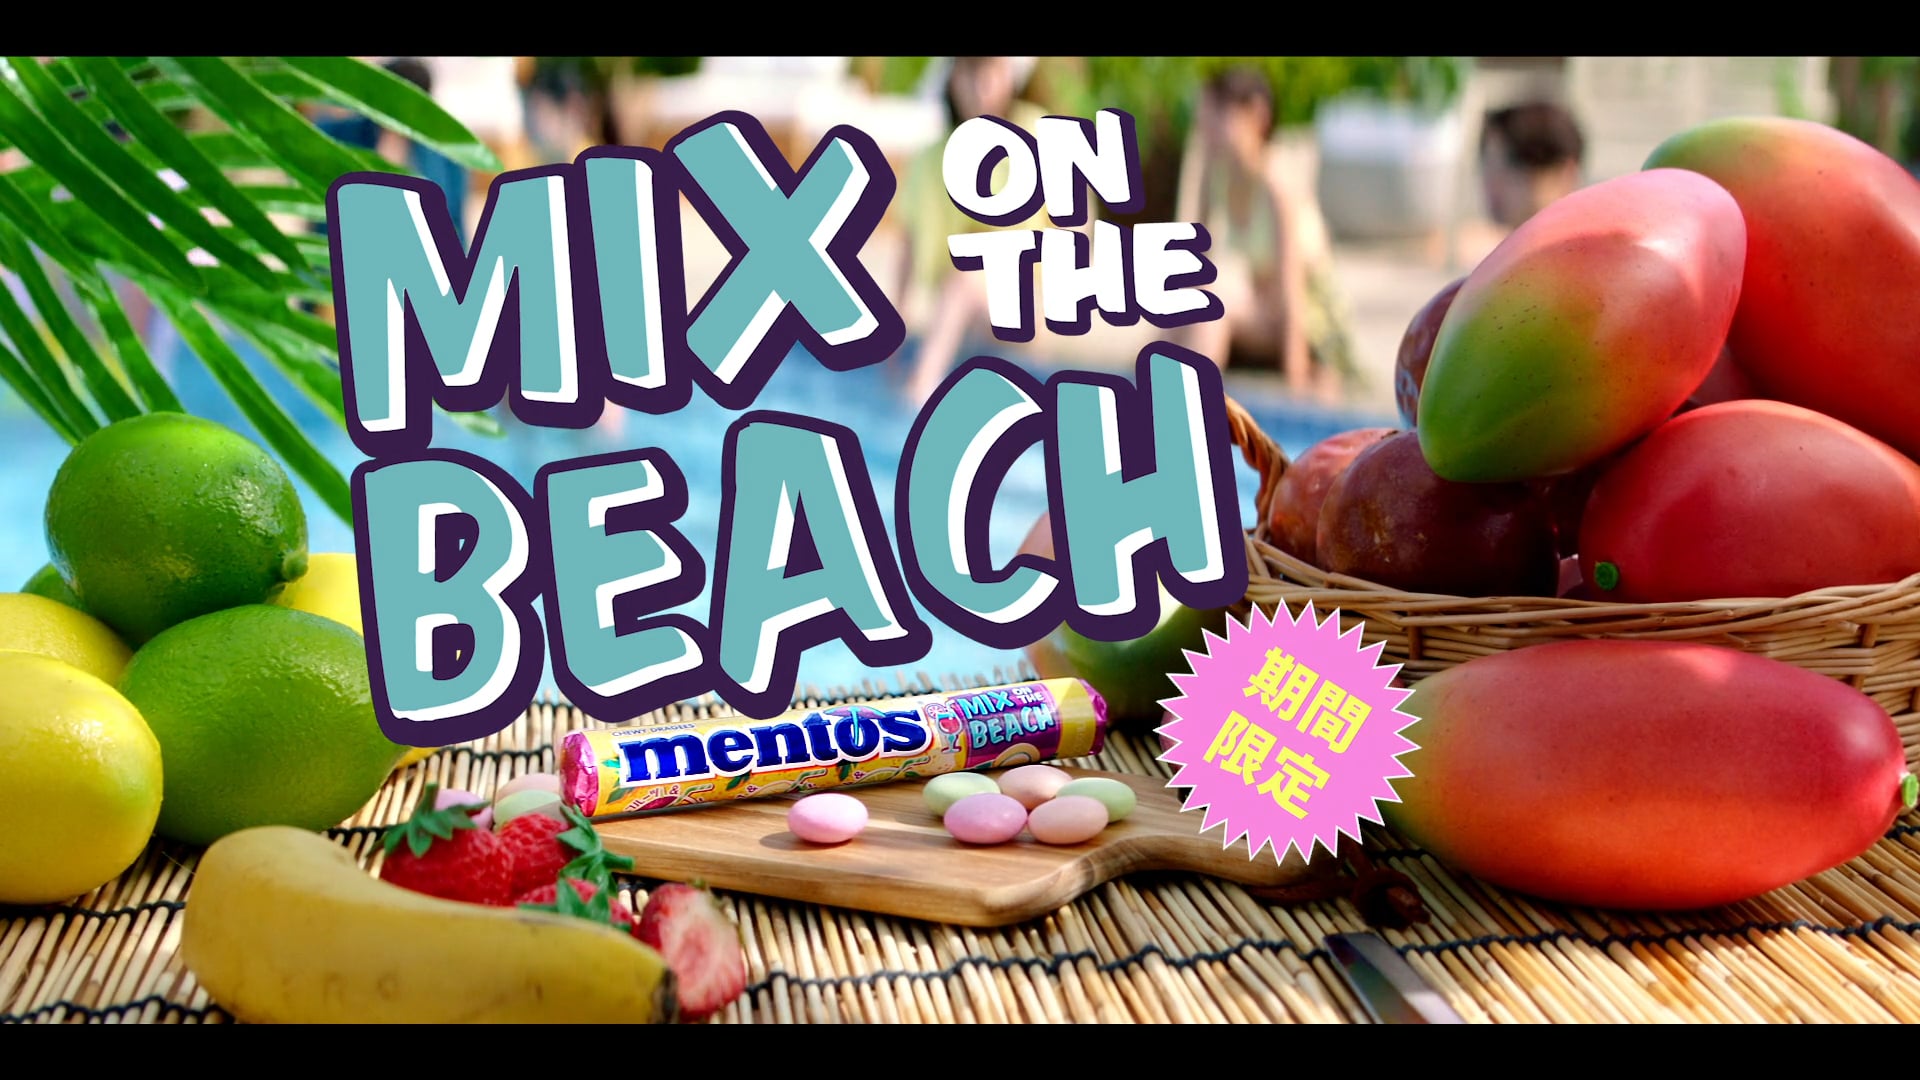 Mentos "Mix On The Beach"